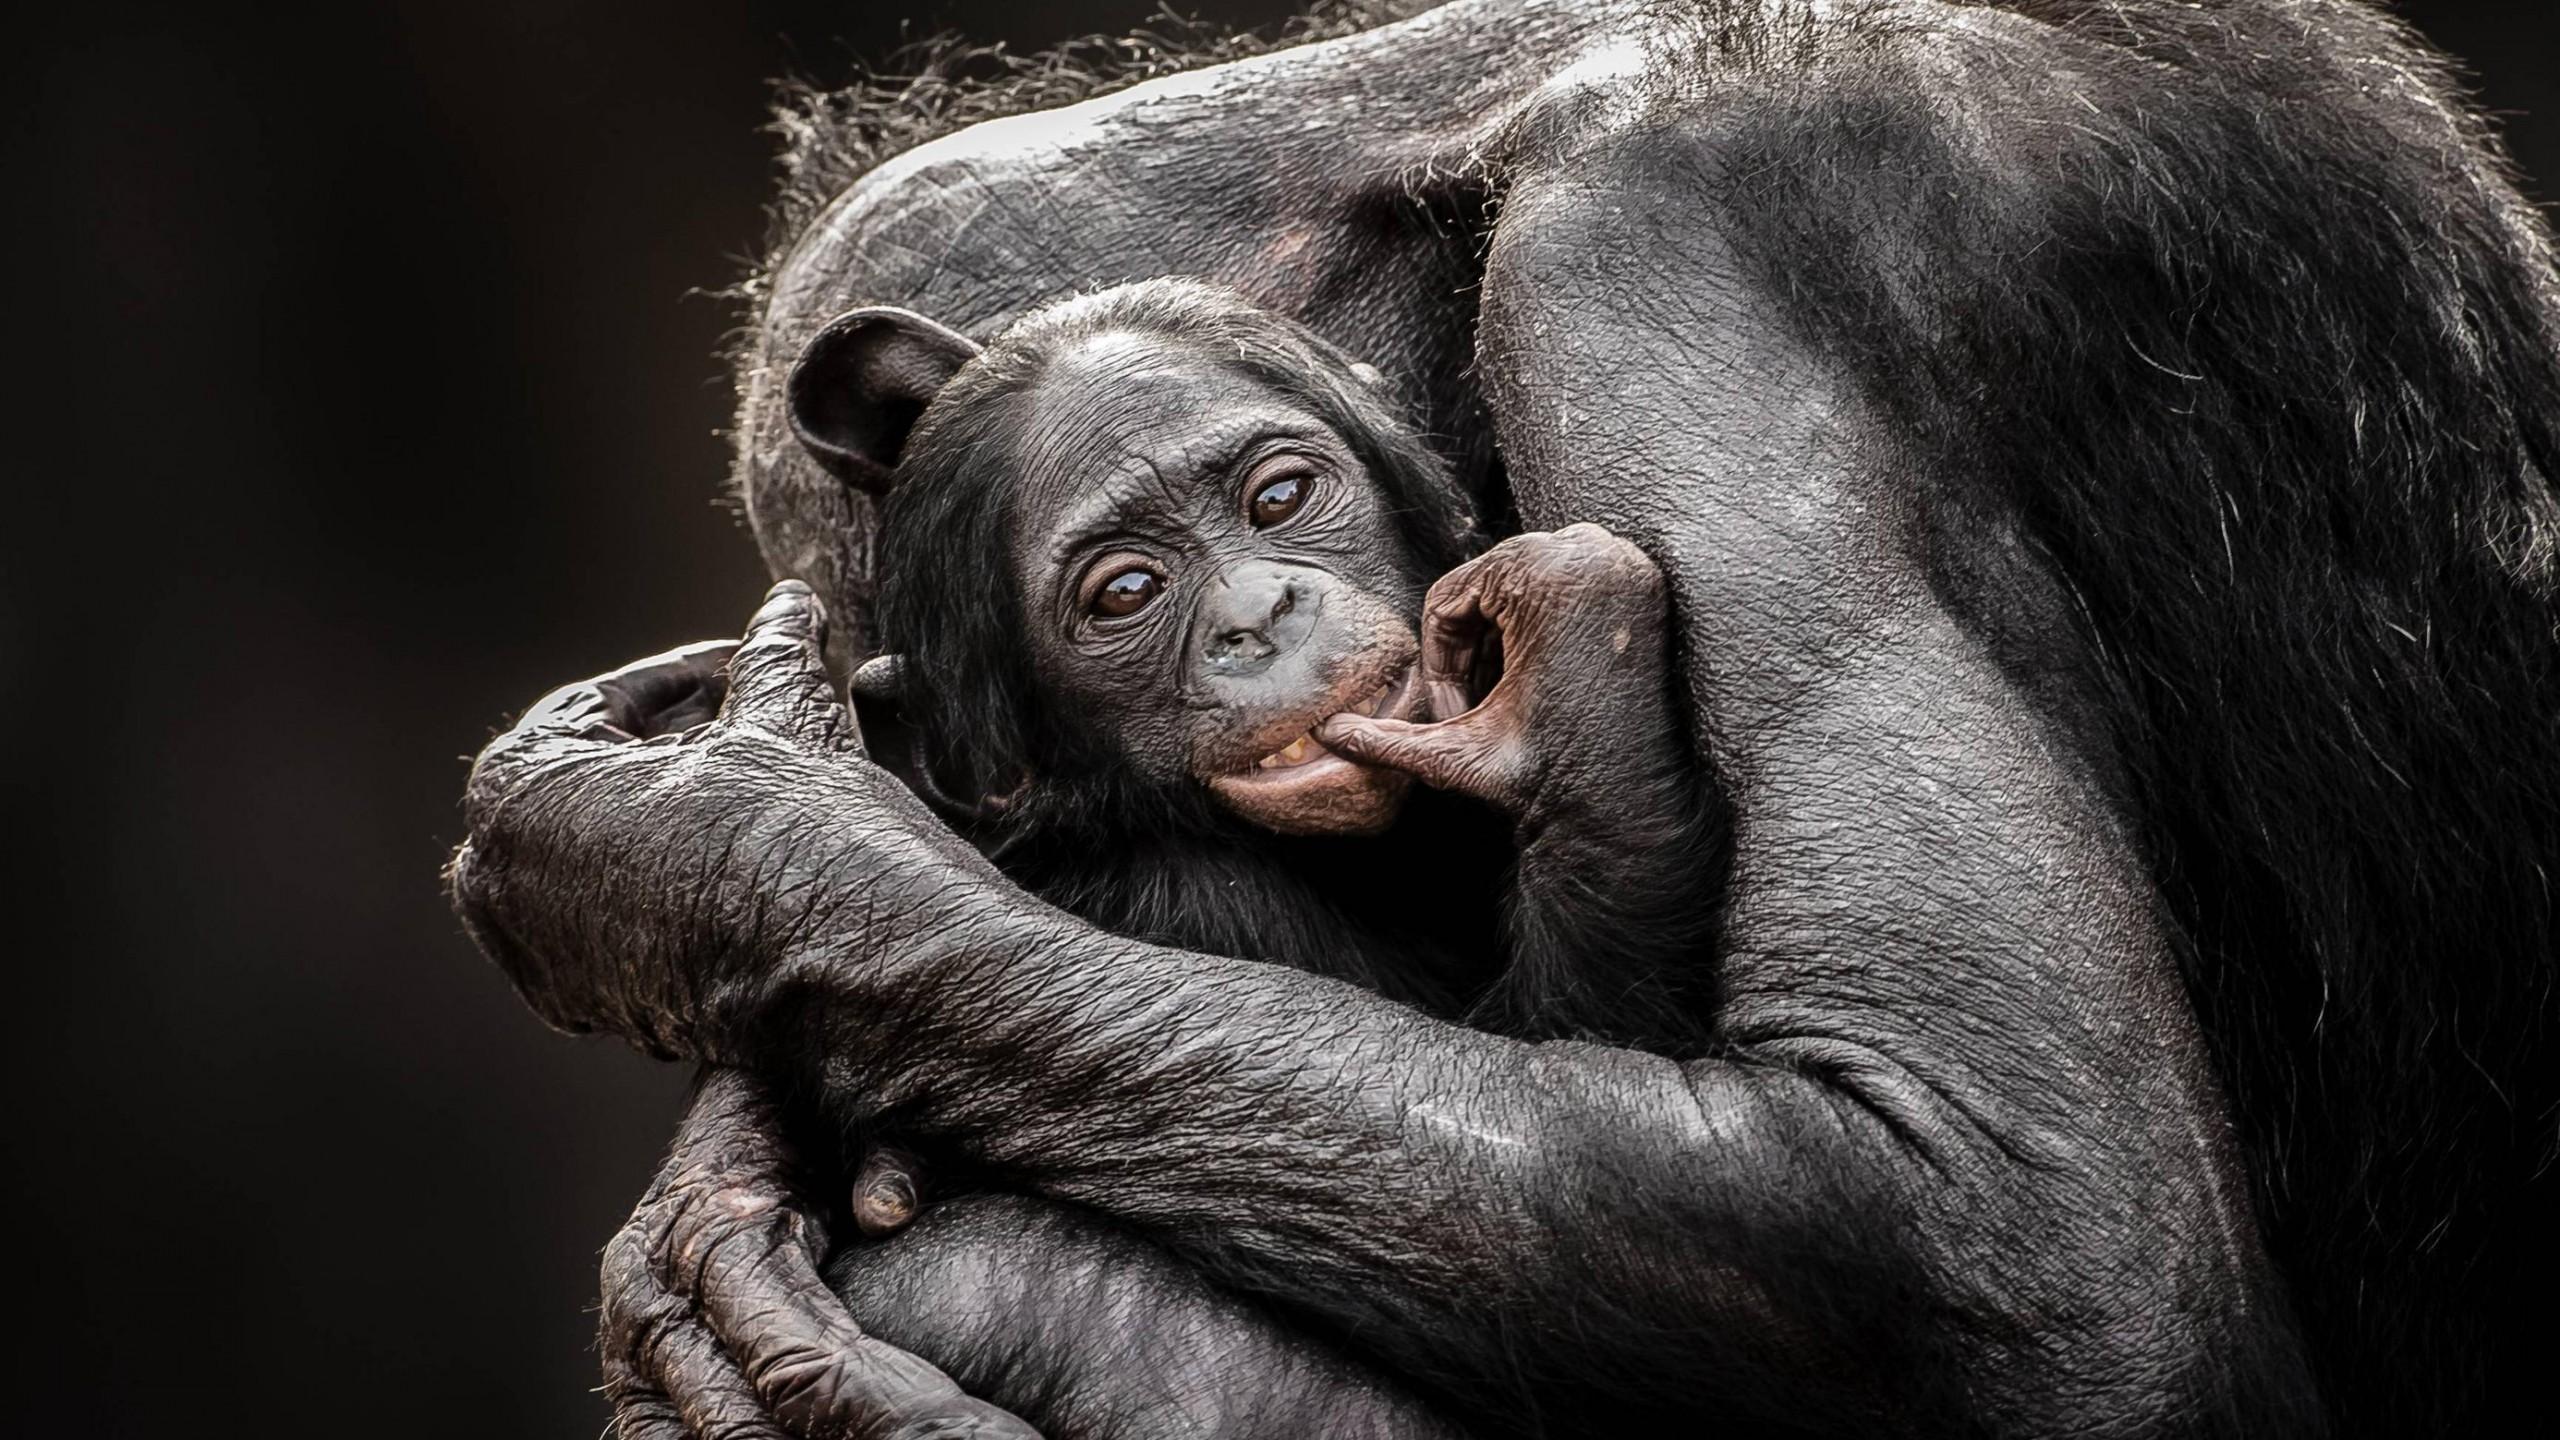 Wallpaper National Geographics, Monkey, Baby, Hugs, Animals